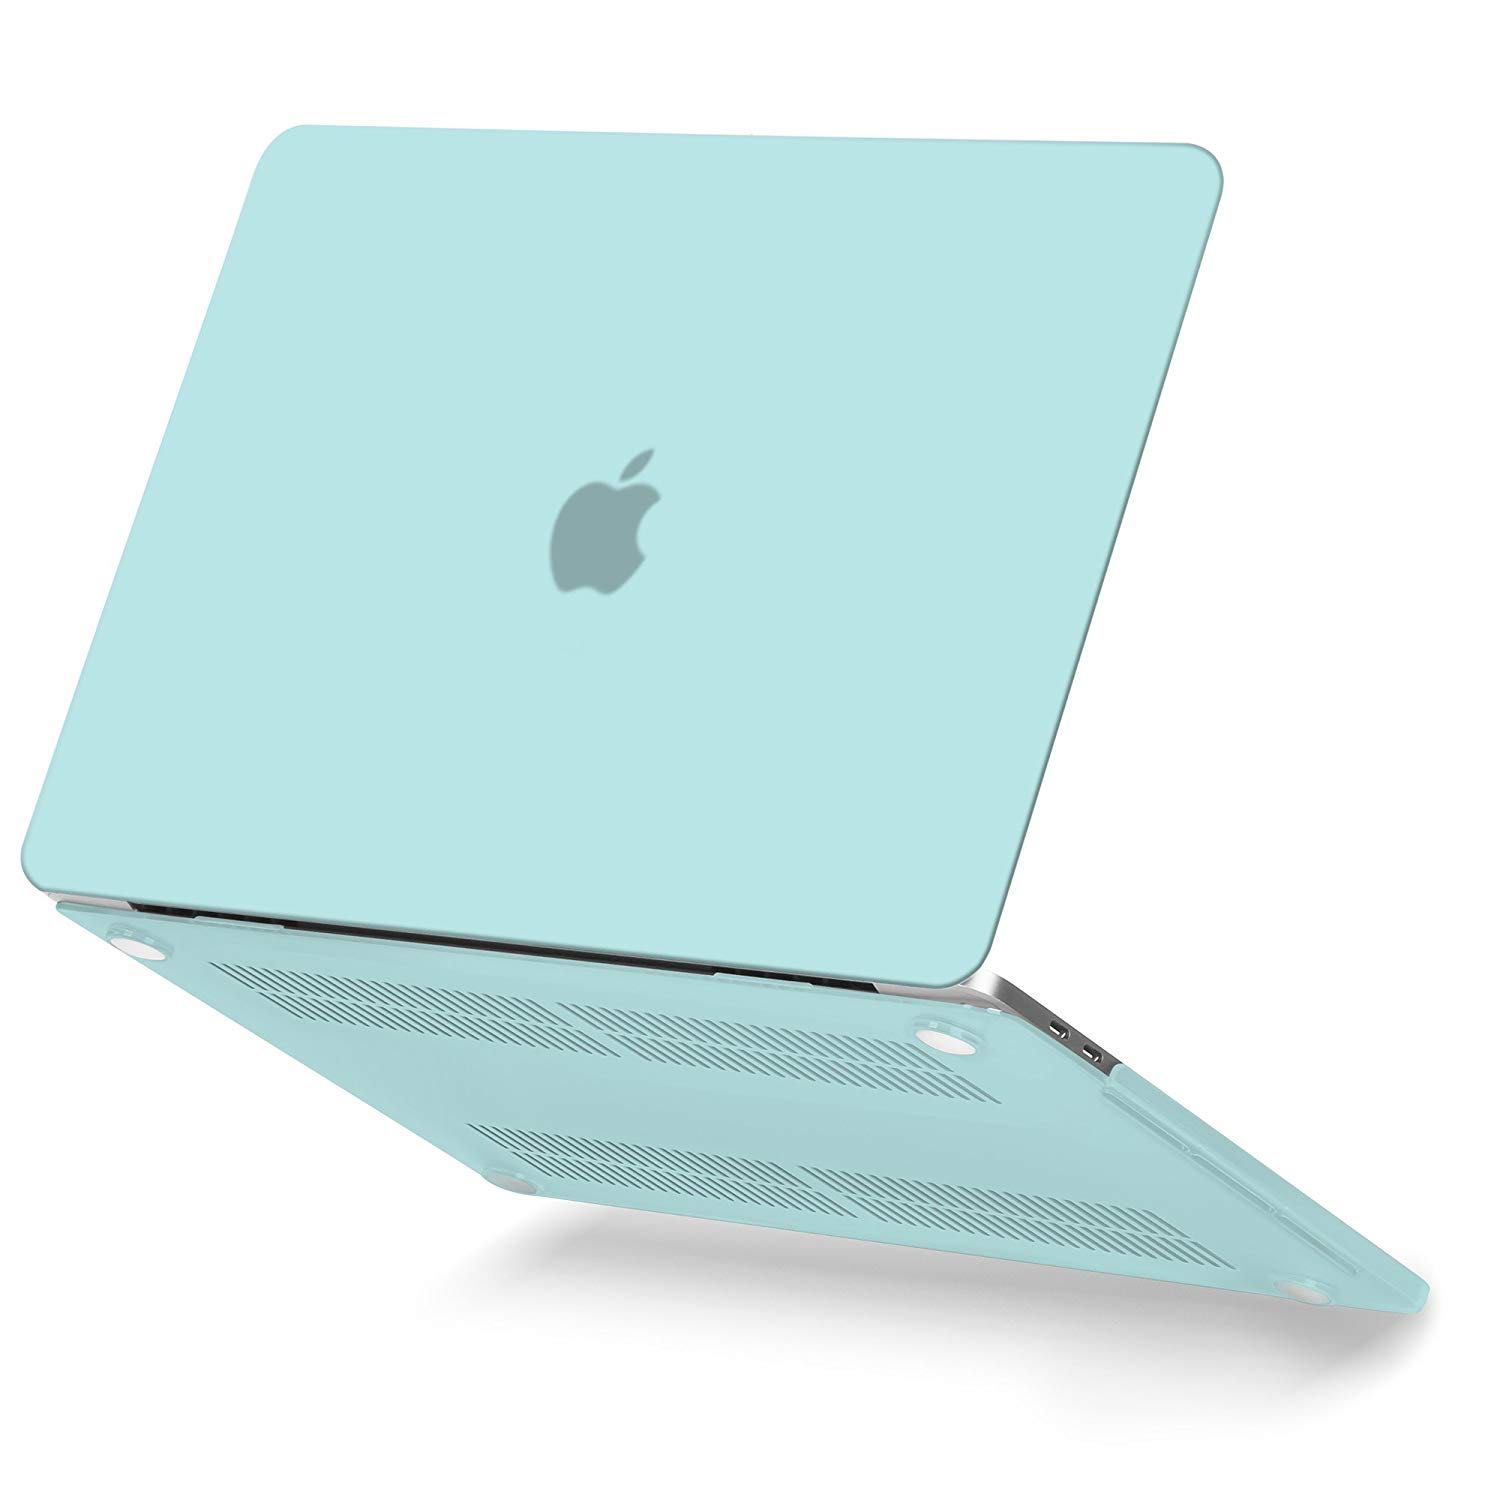 Carcasa geanta MacBook Pro 15" A1990 A1707 verde turcuaz